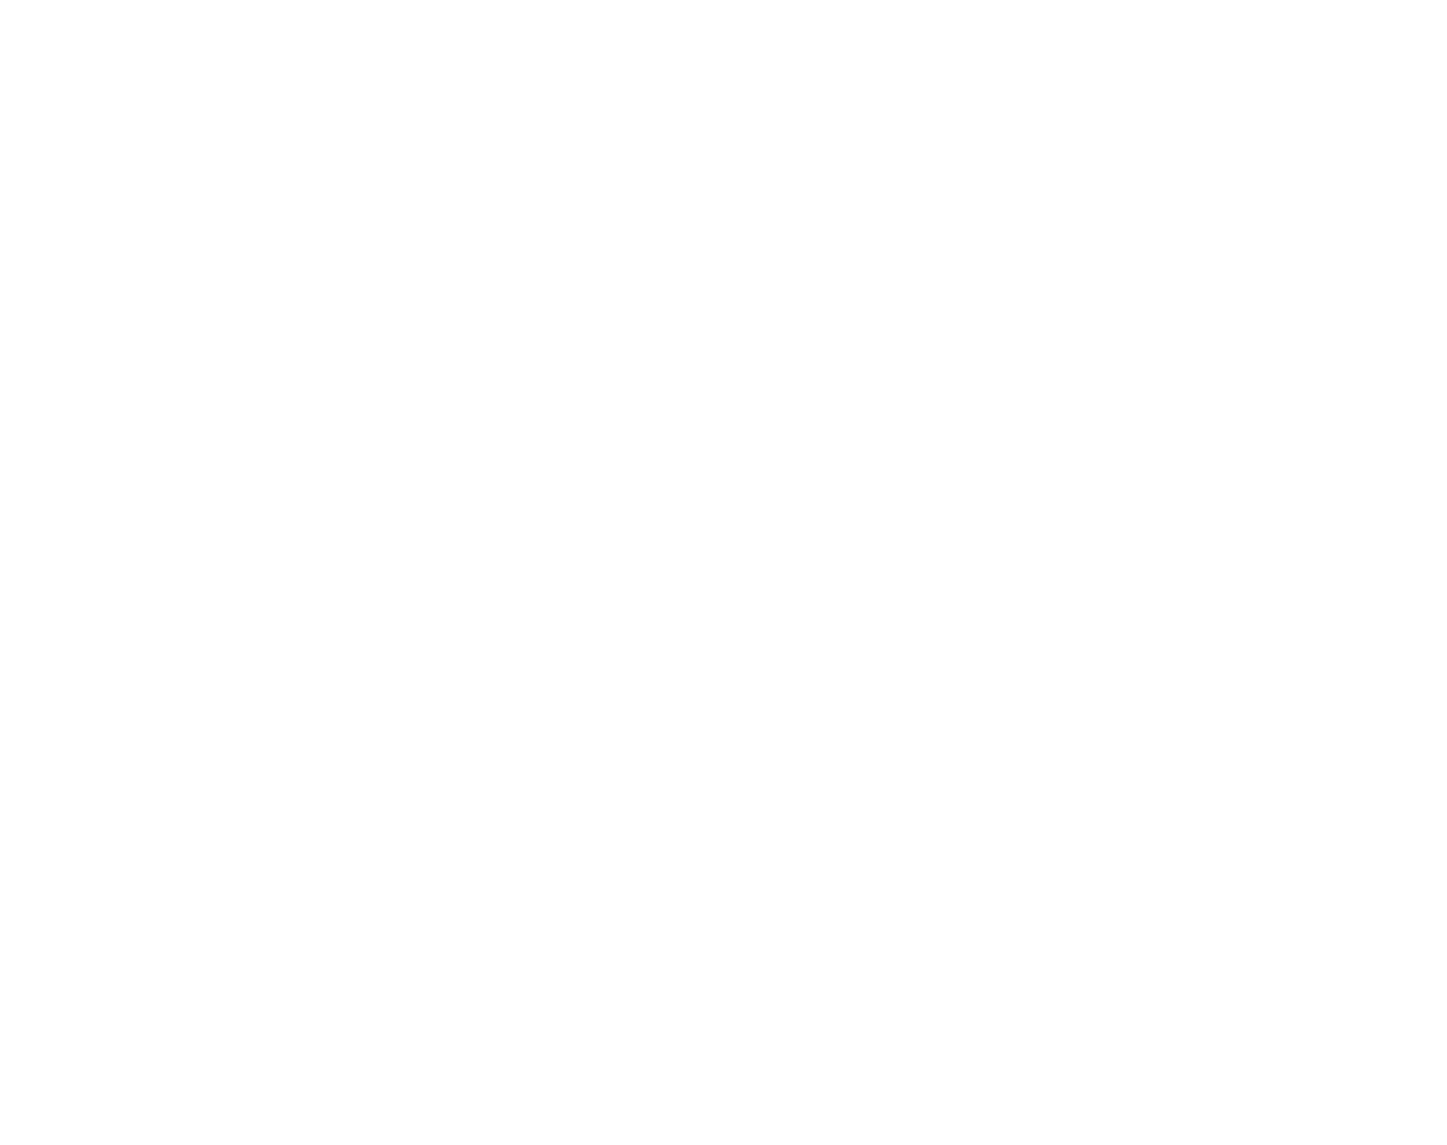 Klayne Rolader Photography